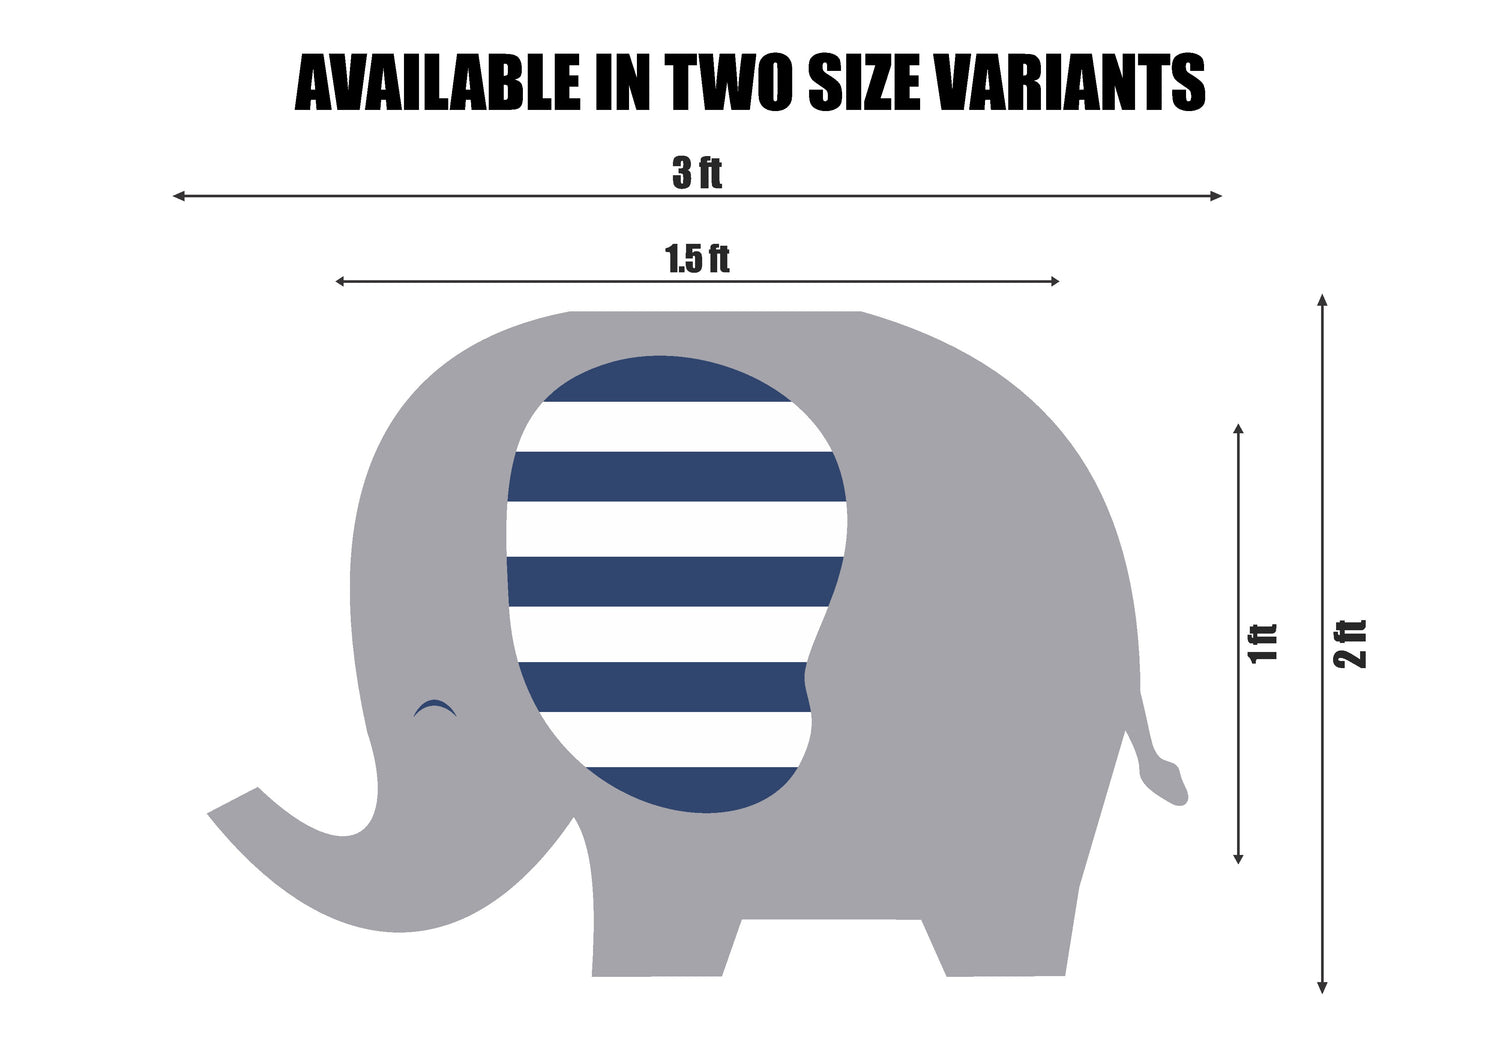 PSI Blue Elephant Theme Cutout - 07